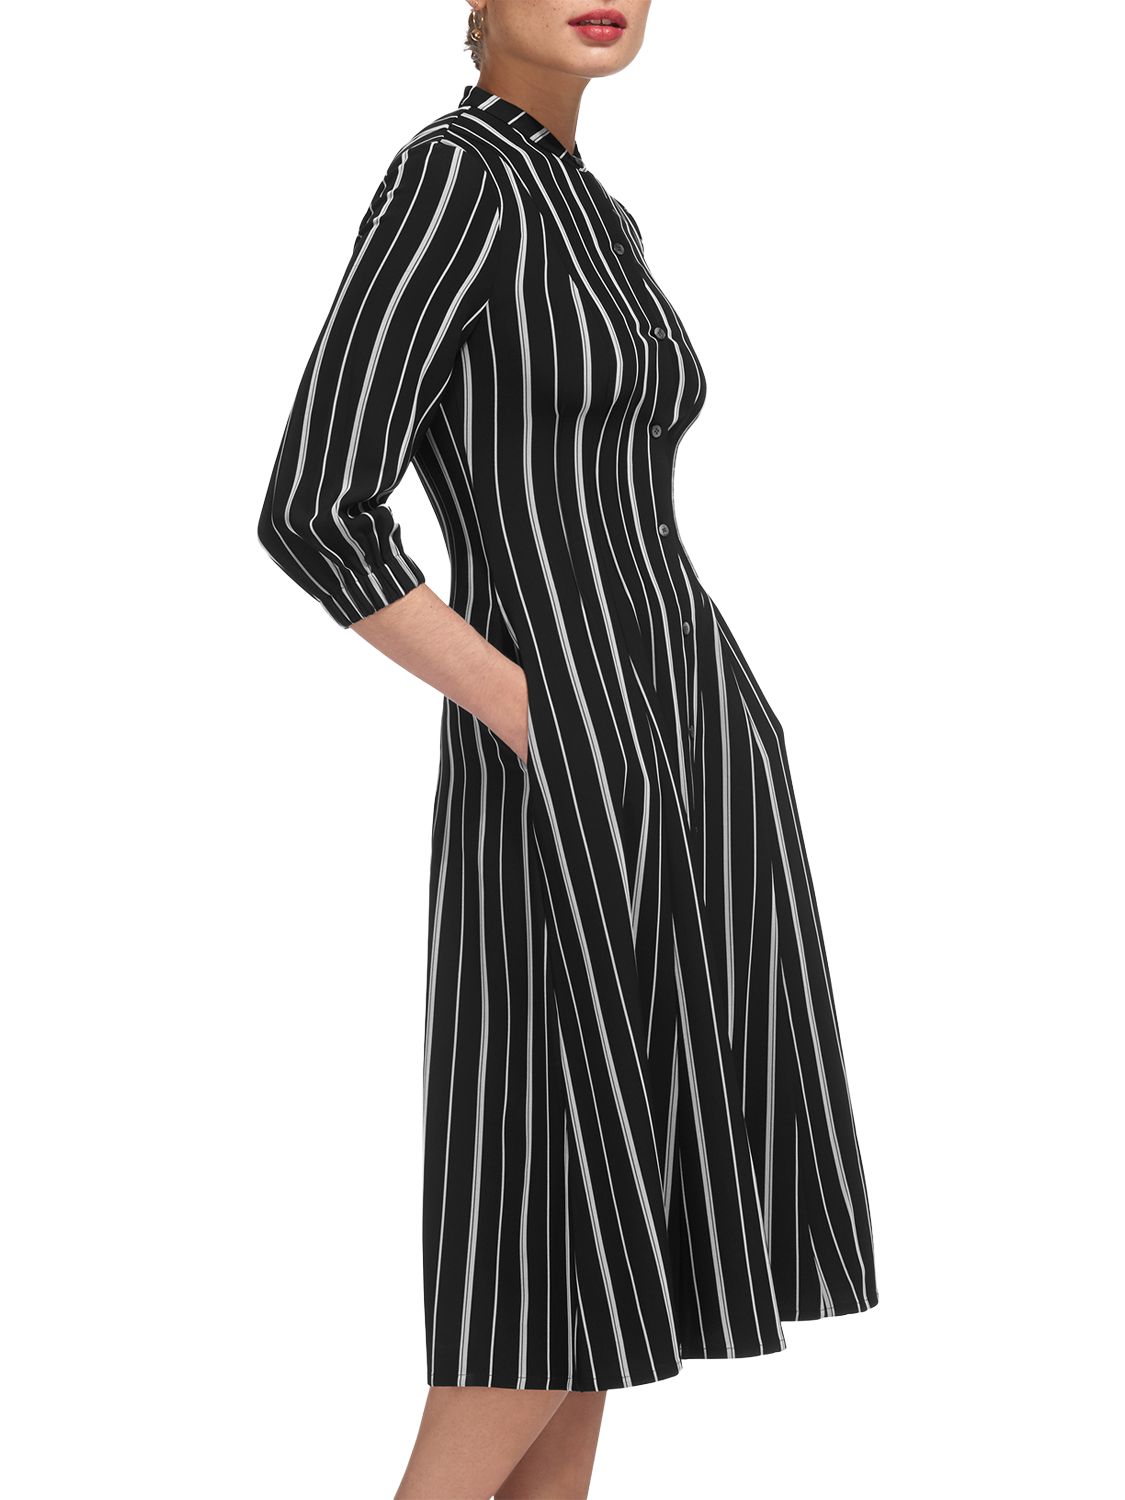 Whistles Leesa Striped Shirt Dress, Black/White